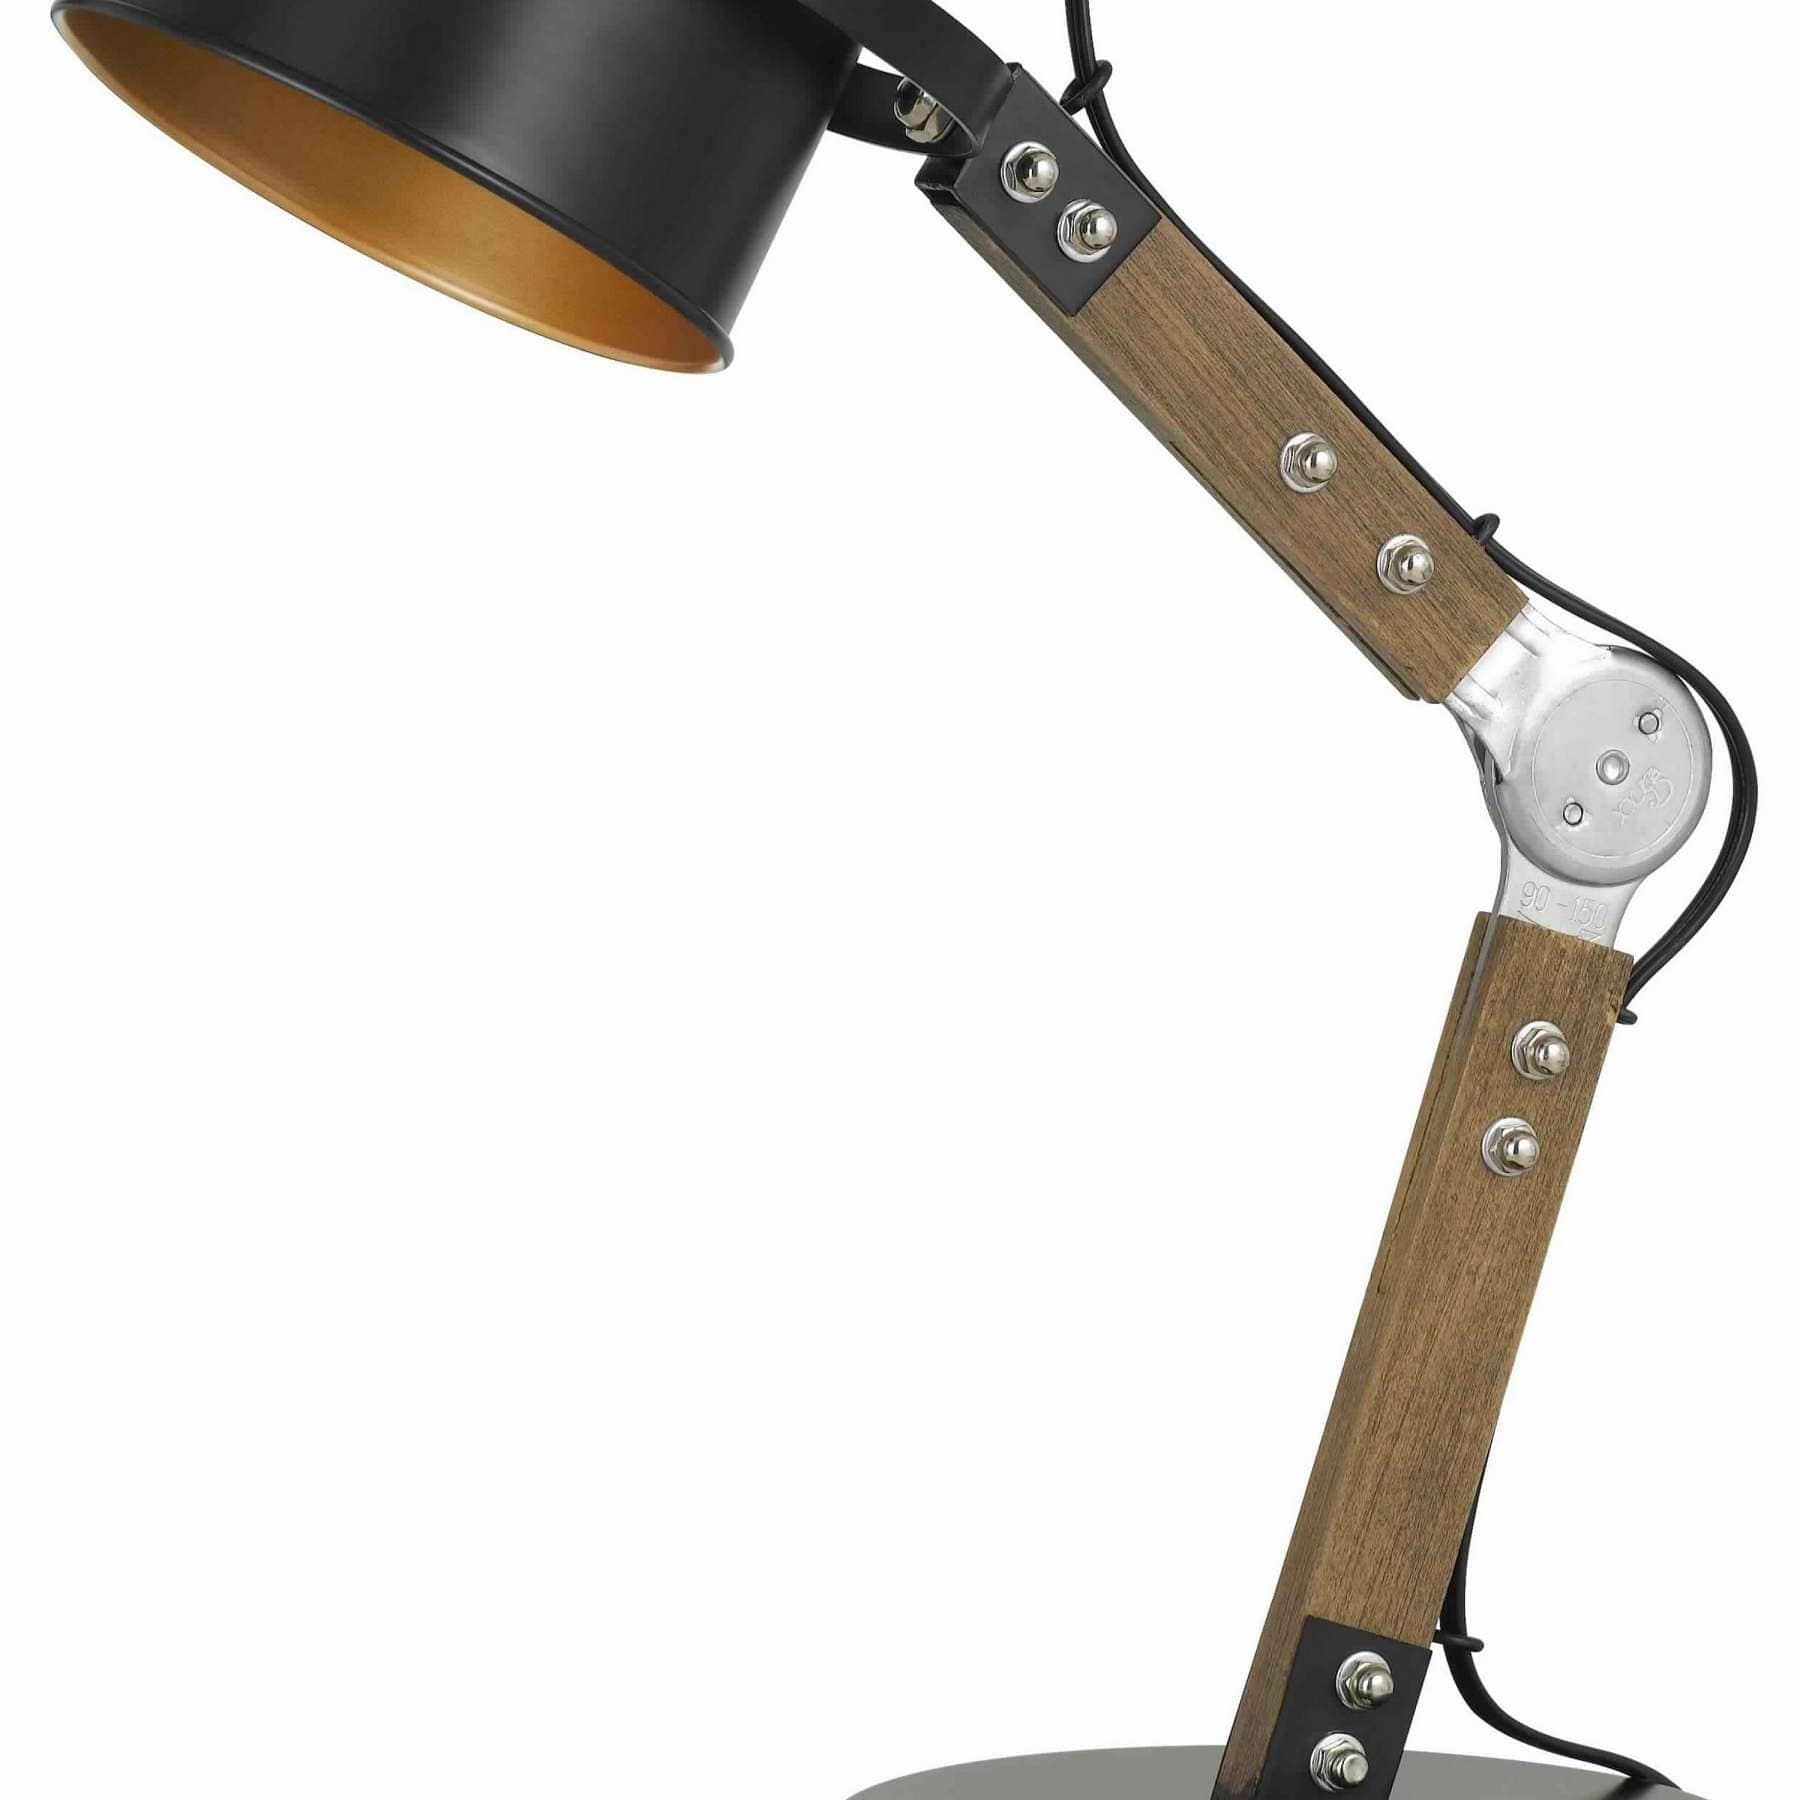 Benzara Swivel And Adjustable Metal Desk Lamp With Wooden Base, Black By Benzara Desk Lamps BM224821